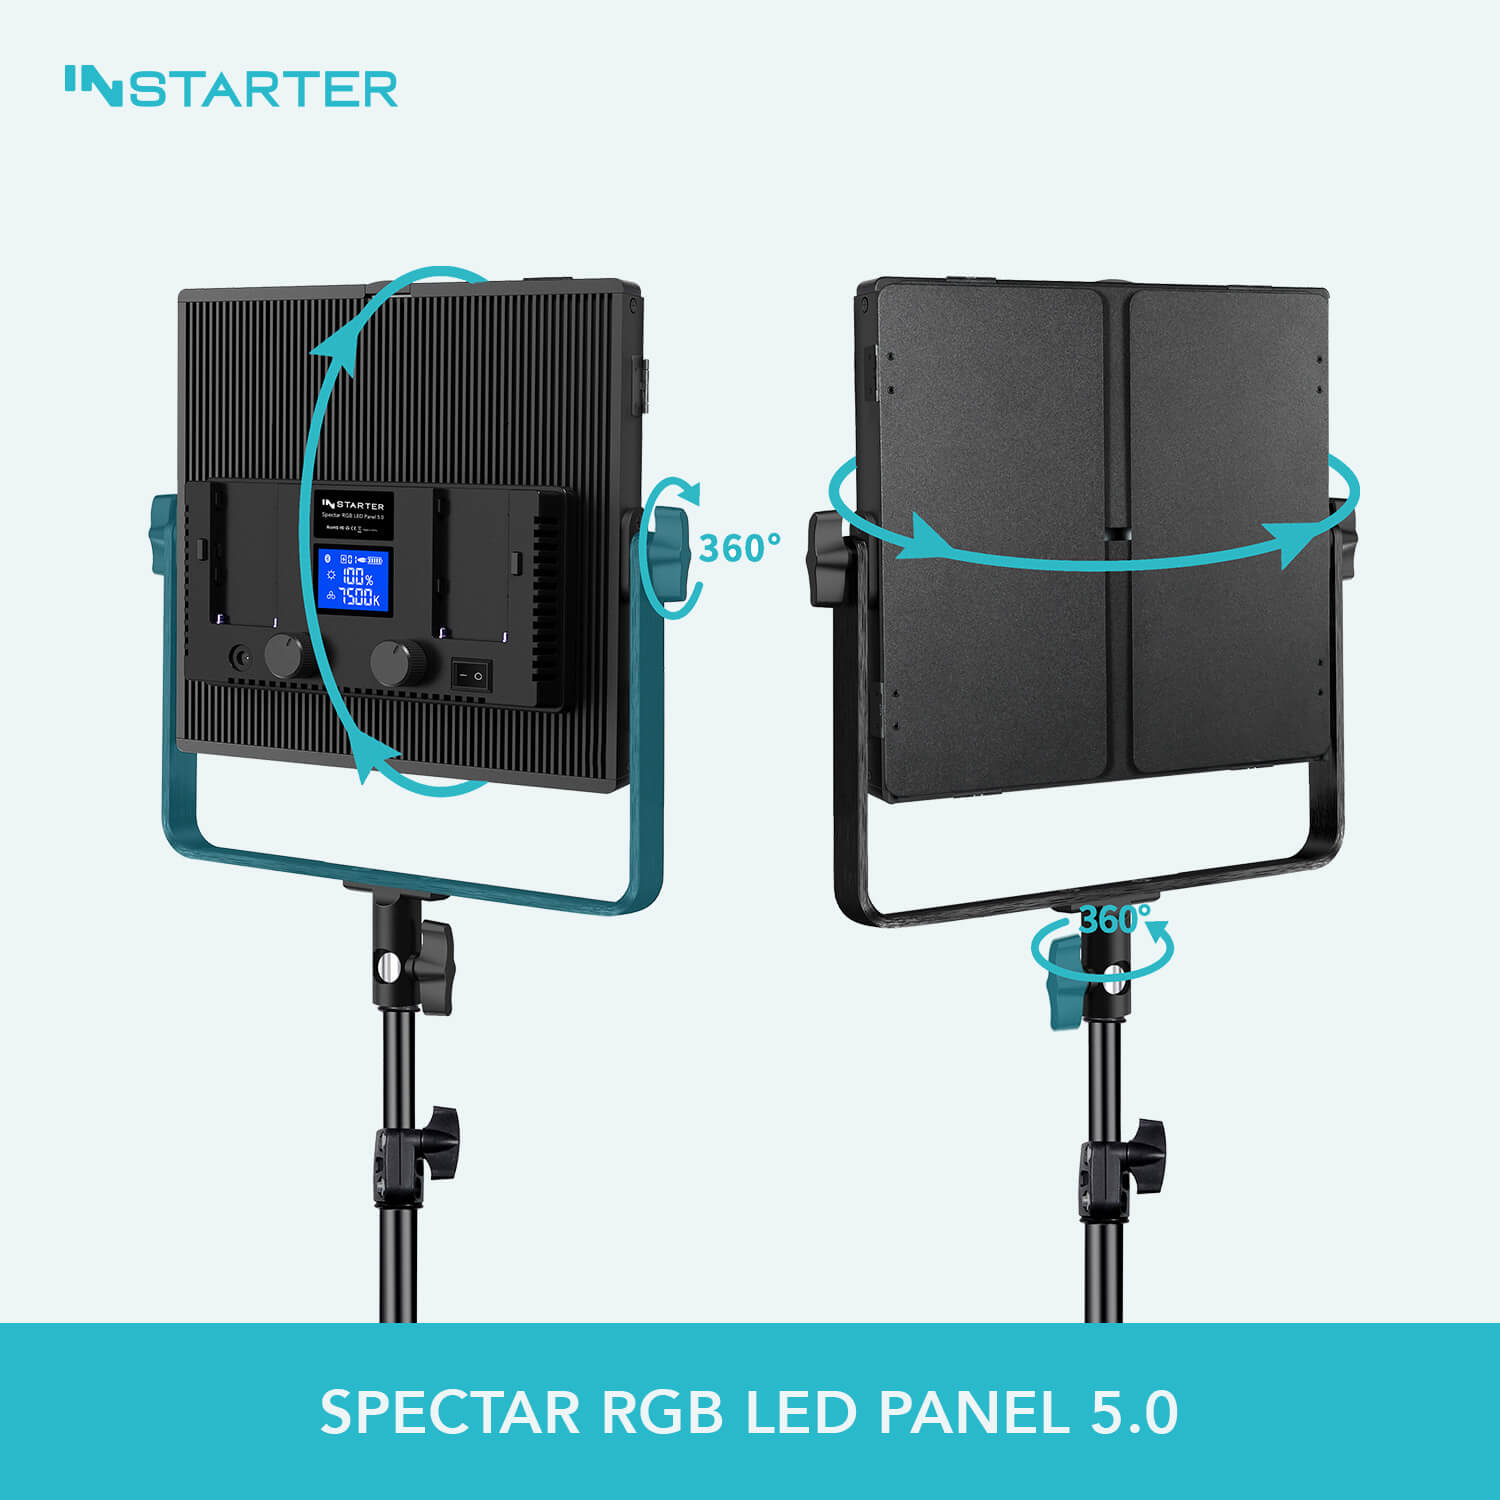 INStarter Spectar RGB LED Panel 5.0 Mounting